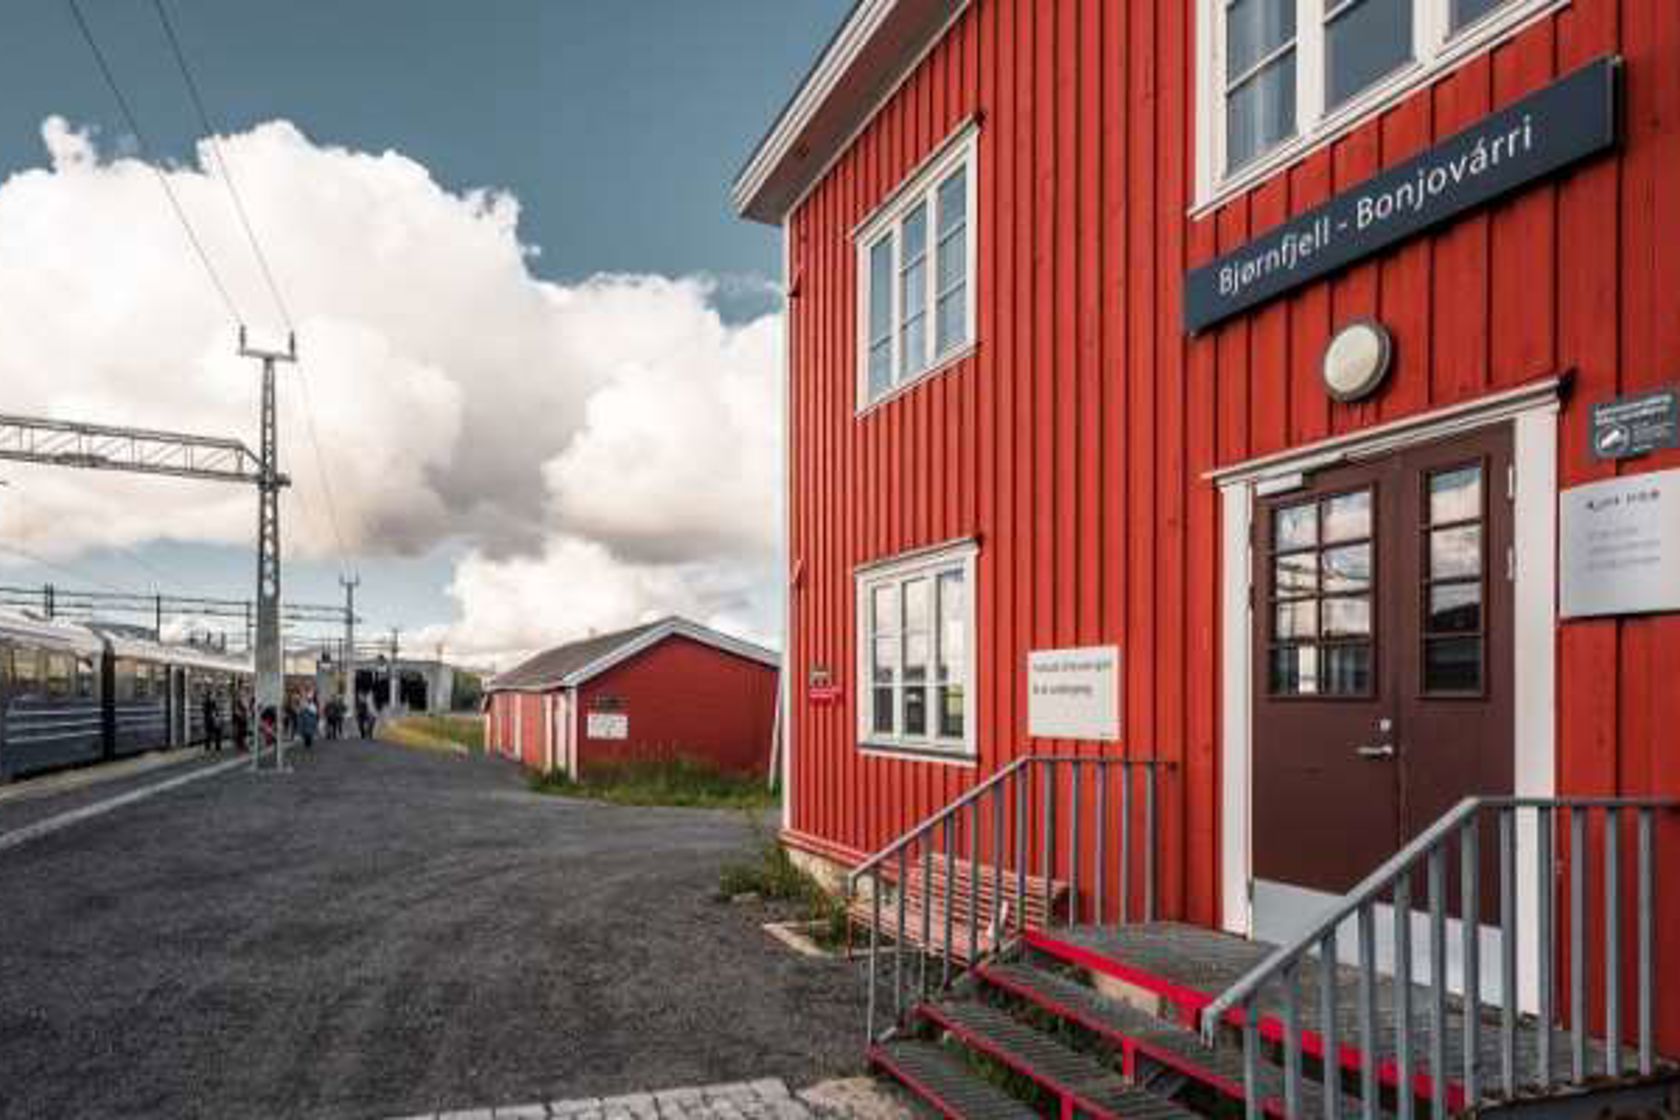 Exterior view of Bjørnfjell station